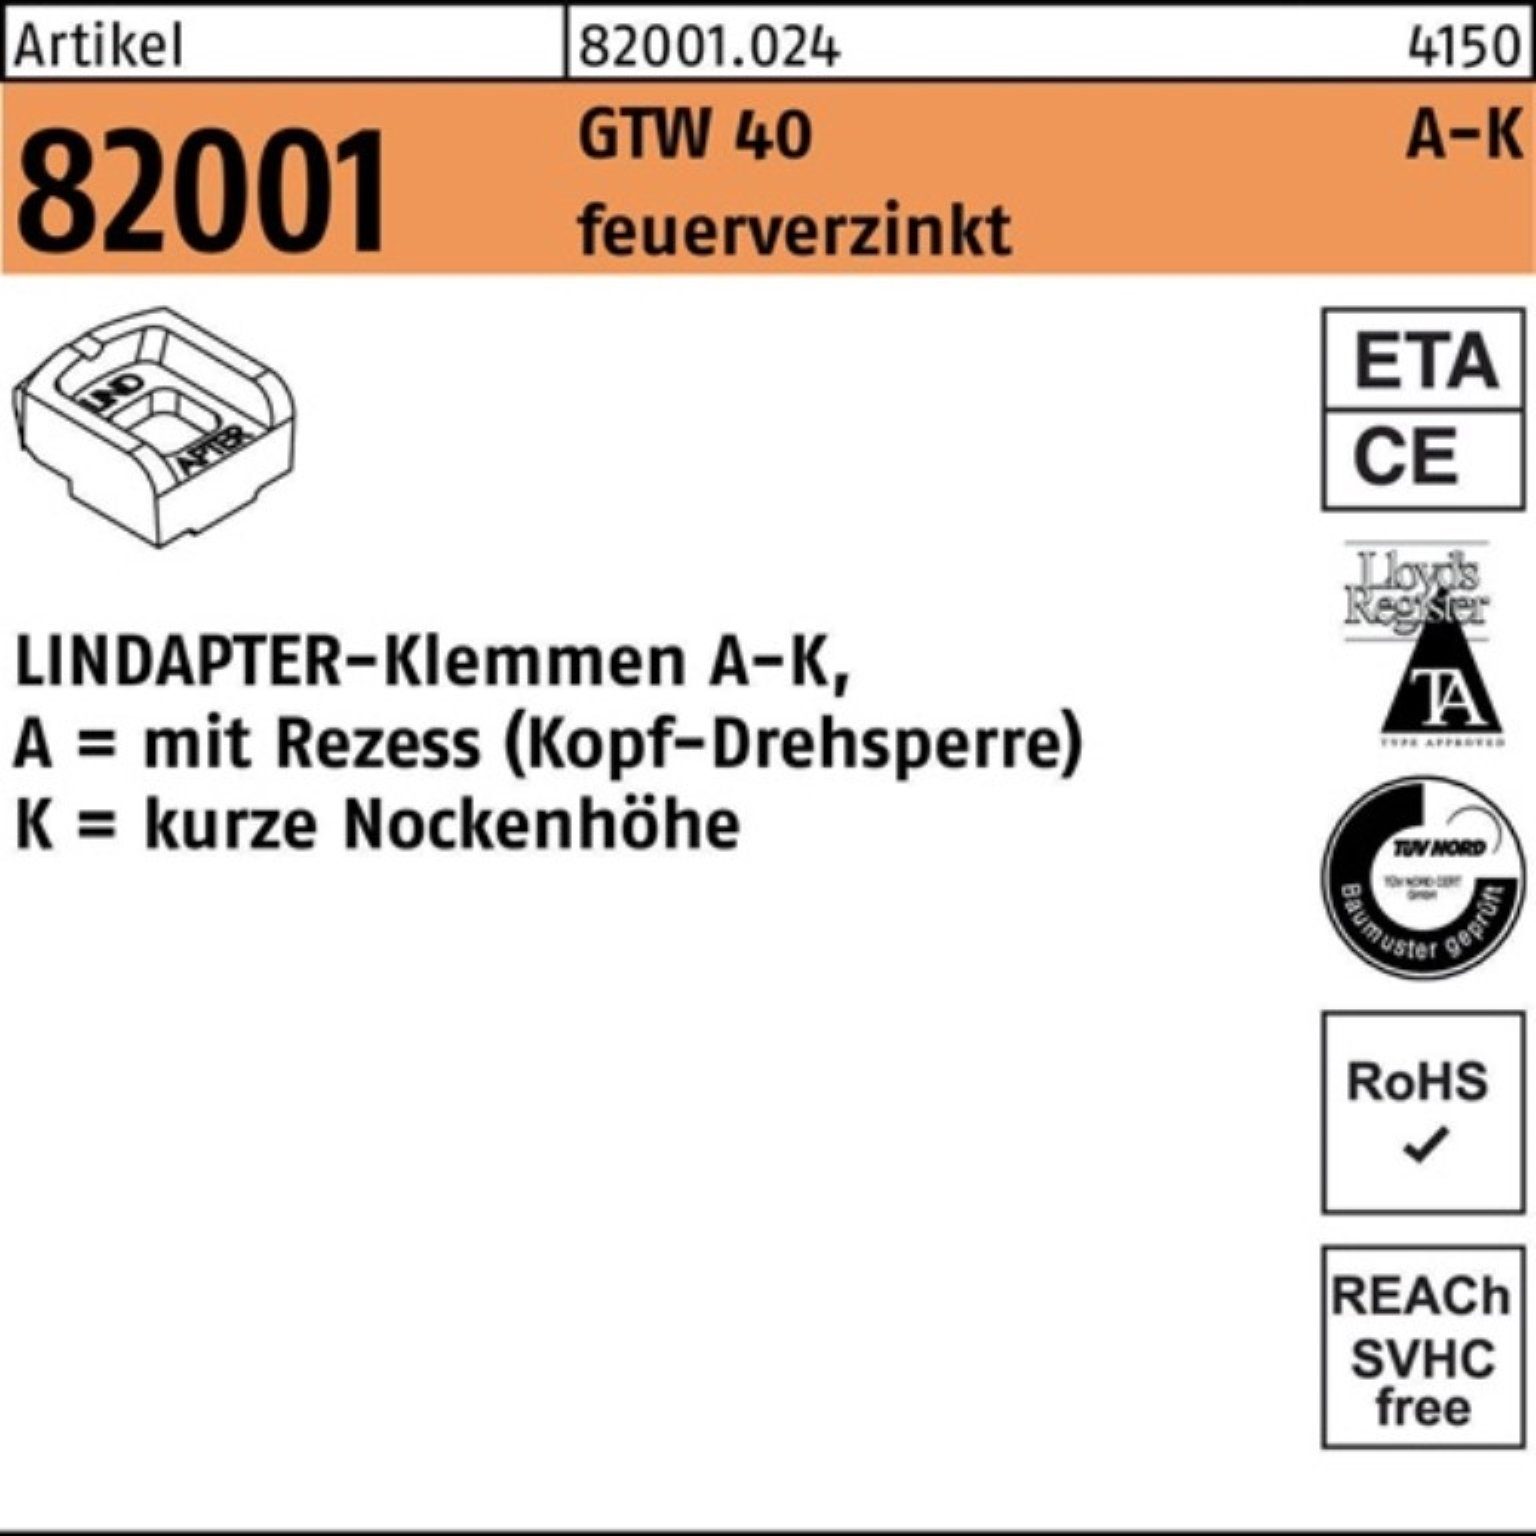 LINDAP feuerverz. Pack 1 Klemmen 40 R KM Klemmen GTW Stück 100er 10/4,0 82001 Lindapter